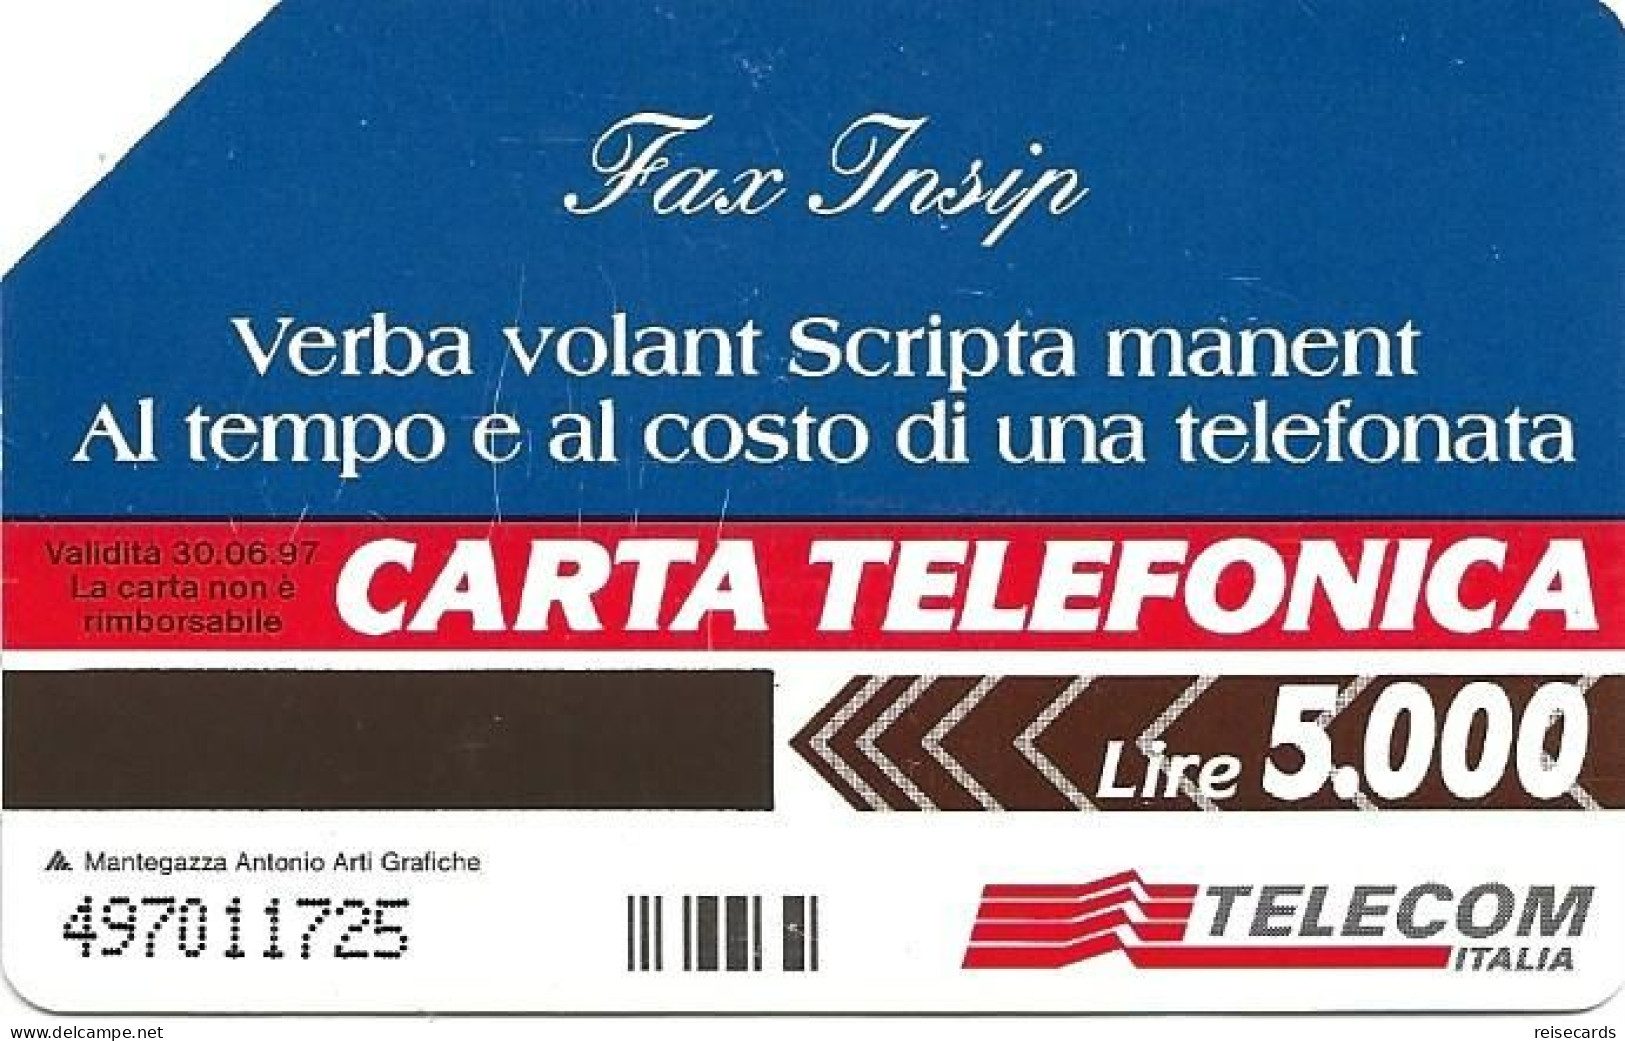 Italy: Telecom Italia - Fax Insip - Public Advertising